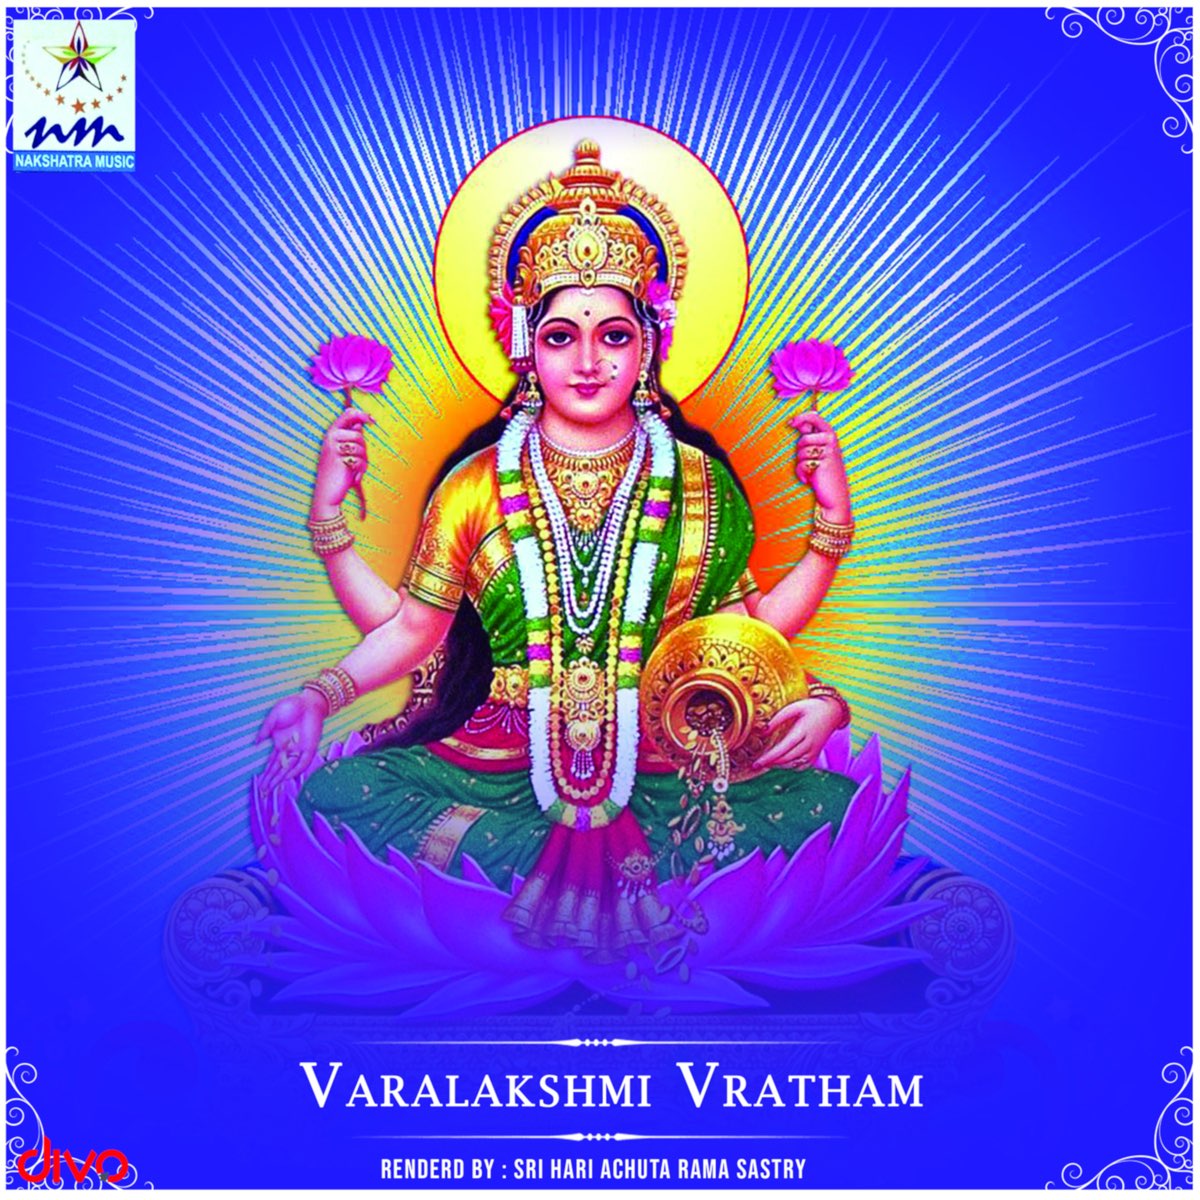 Varalakshmi Vratham by Sri Hari Achuta Rama Sastry on Apple Music